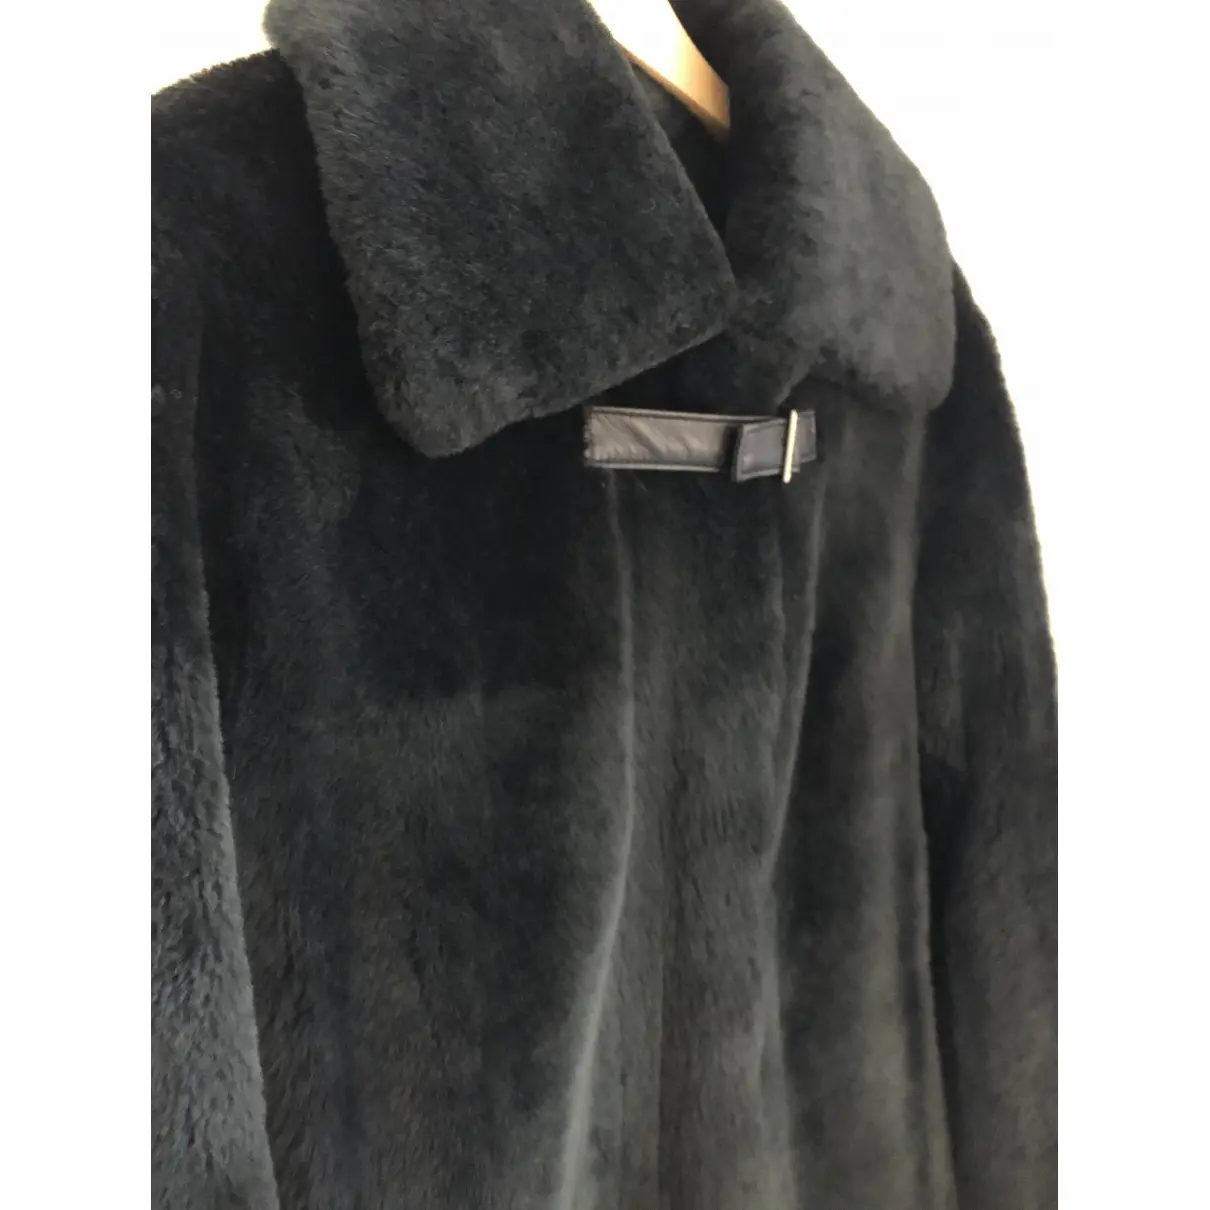 Buy Club Monaco Collection Shearling coat online